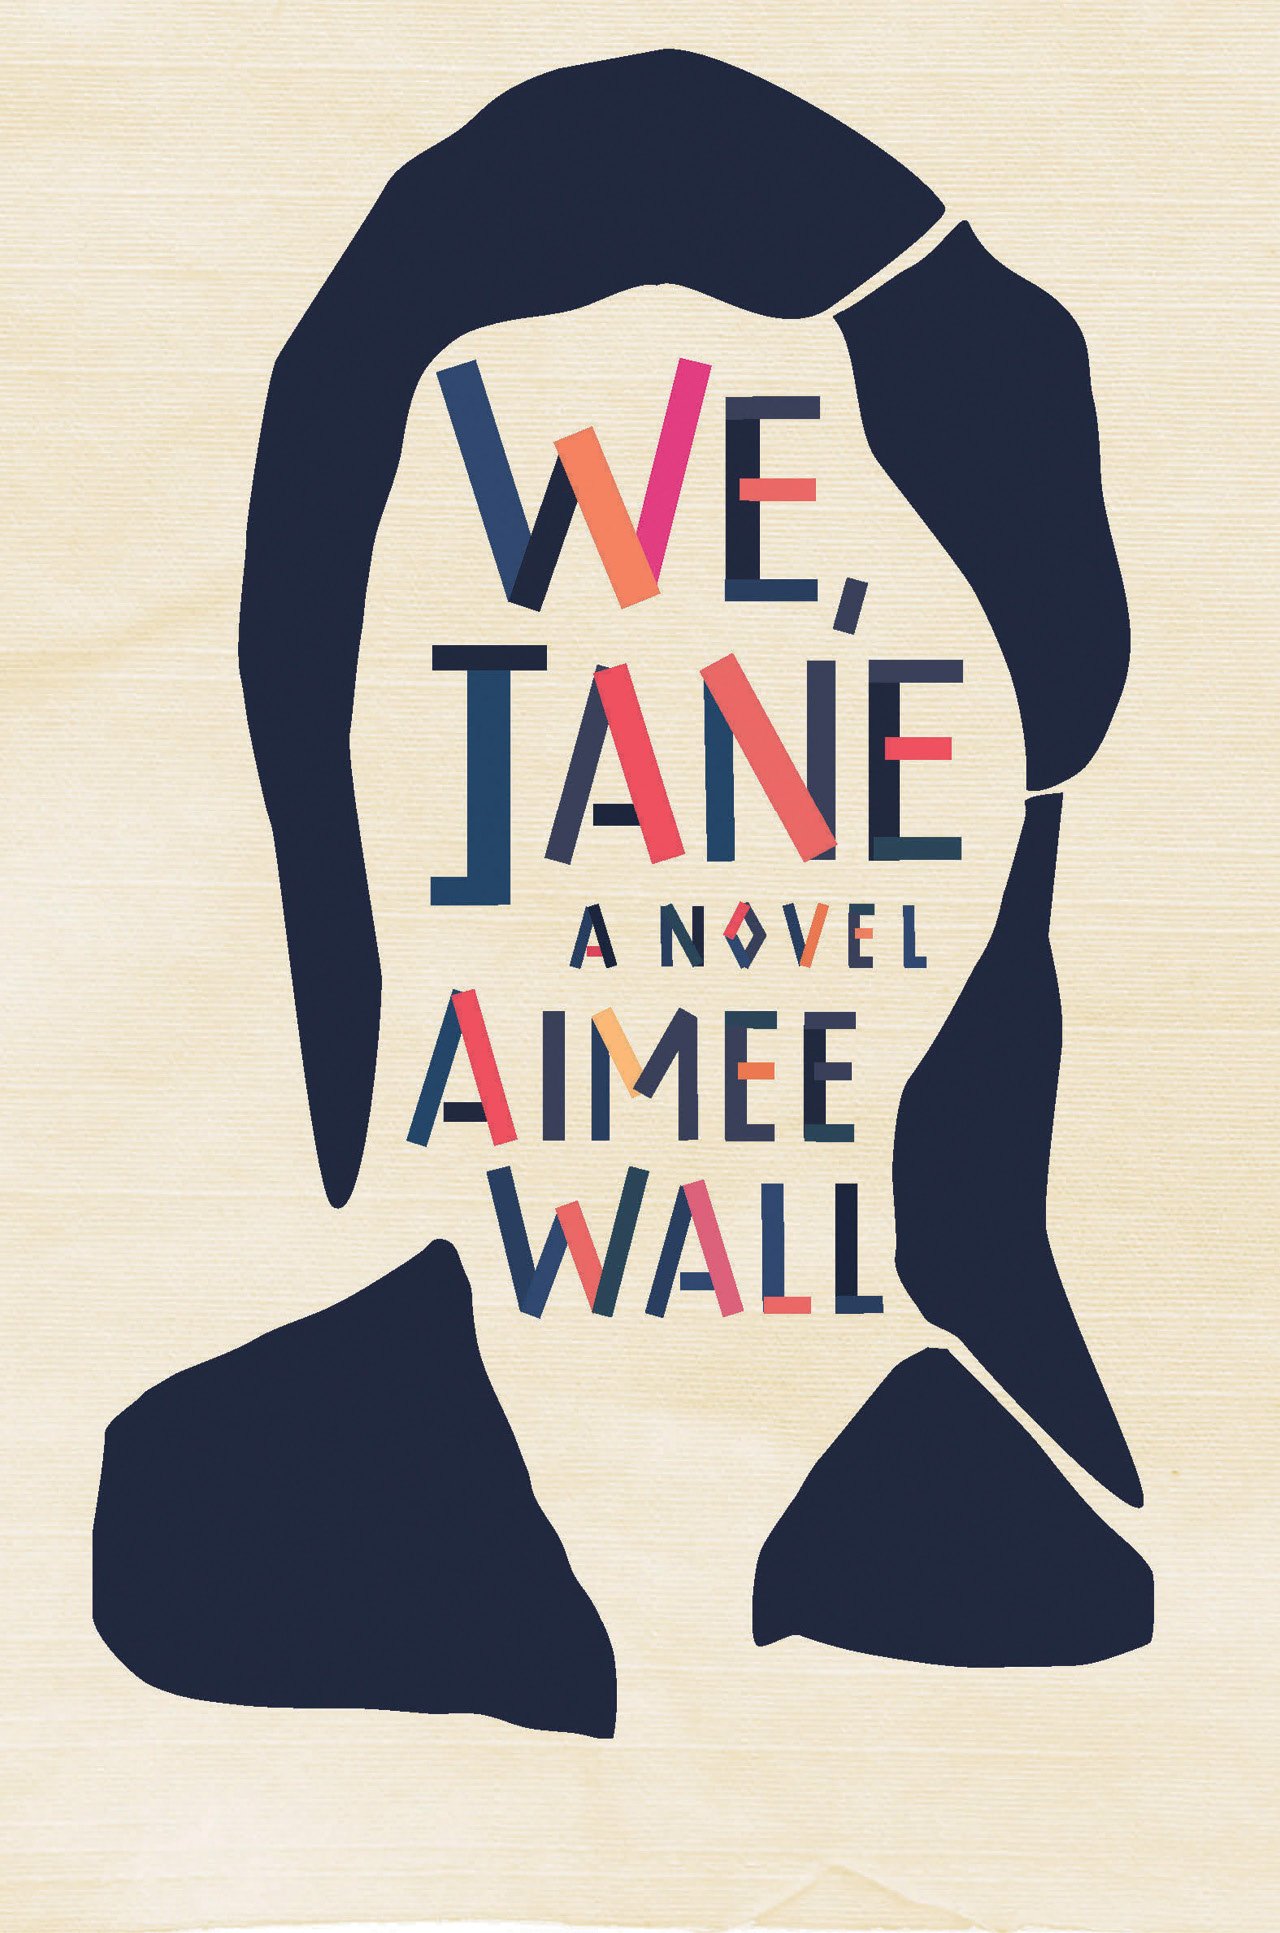 We, Jane by Aimee Wal